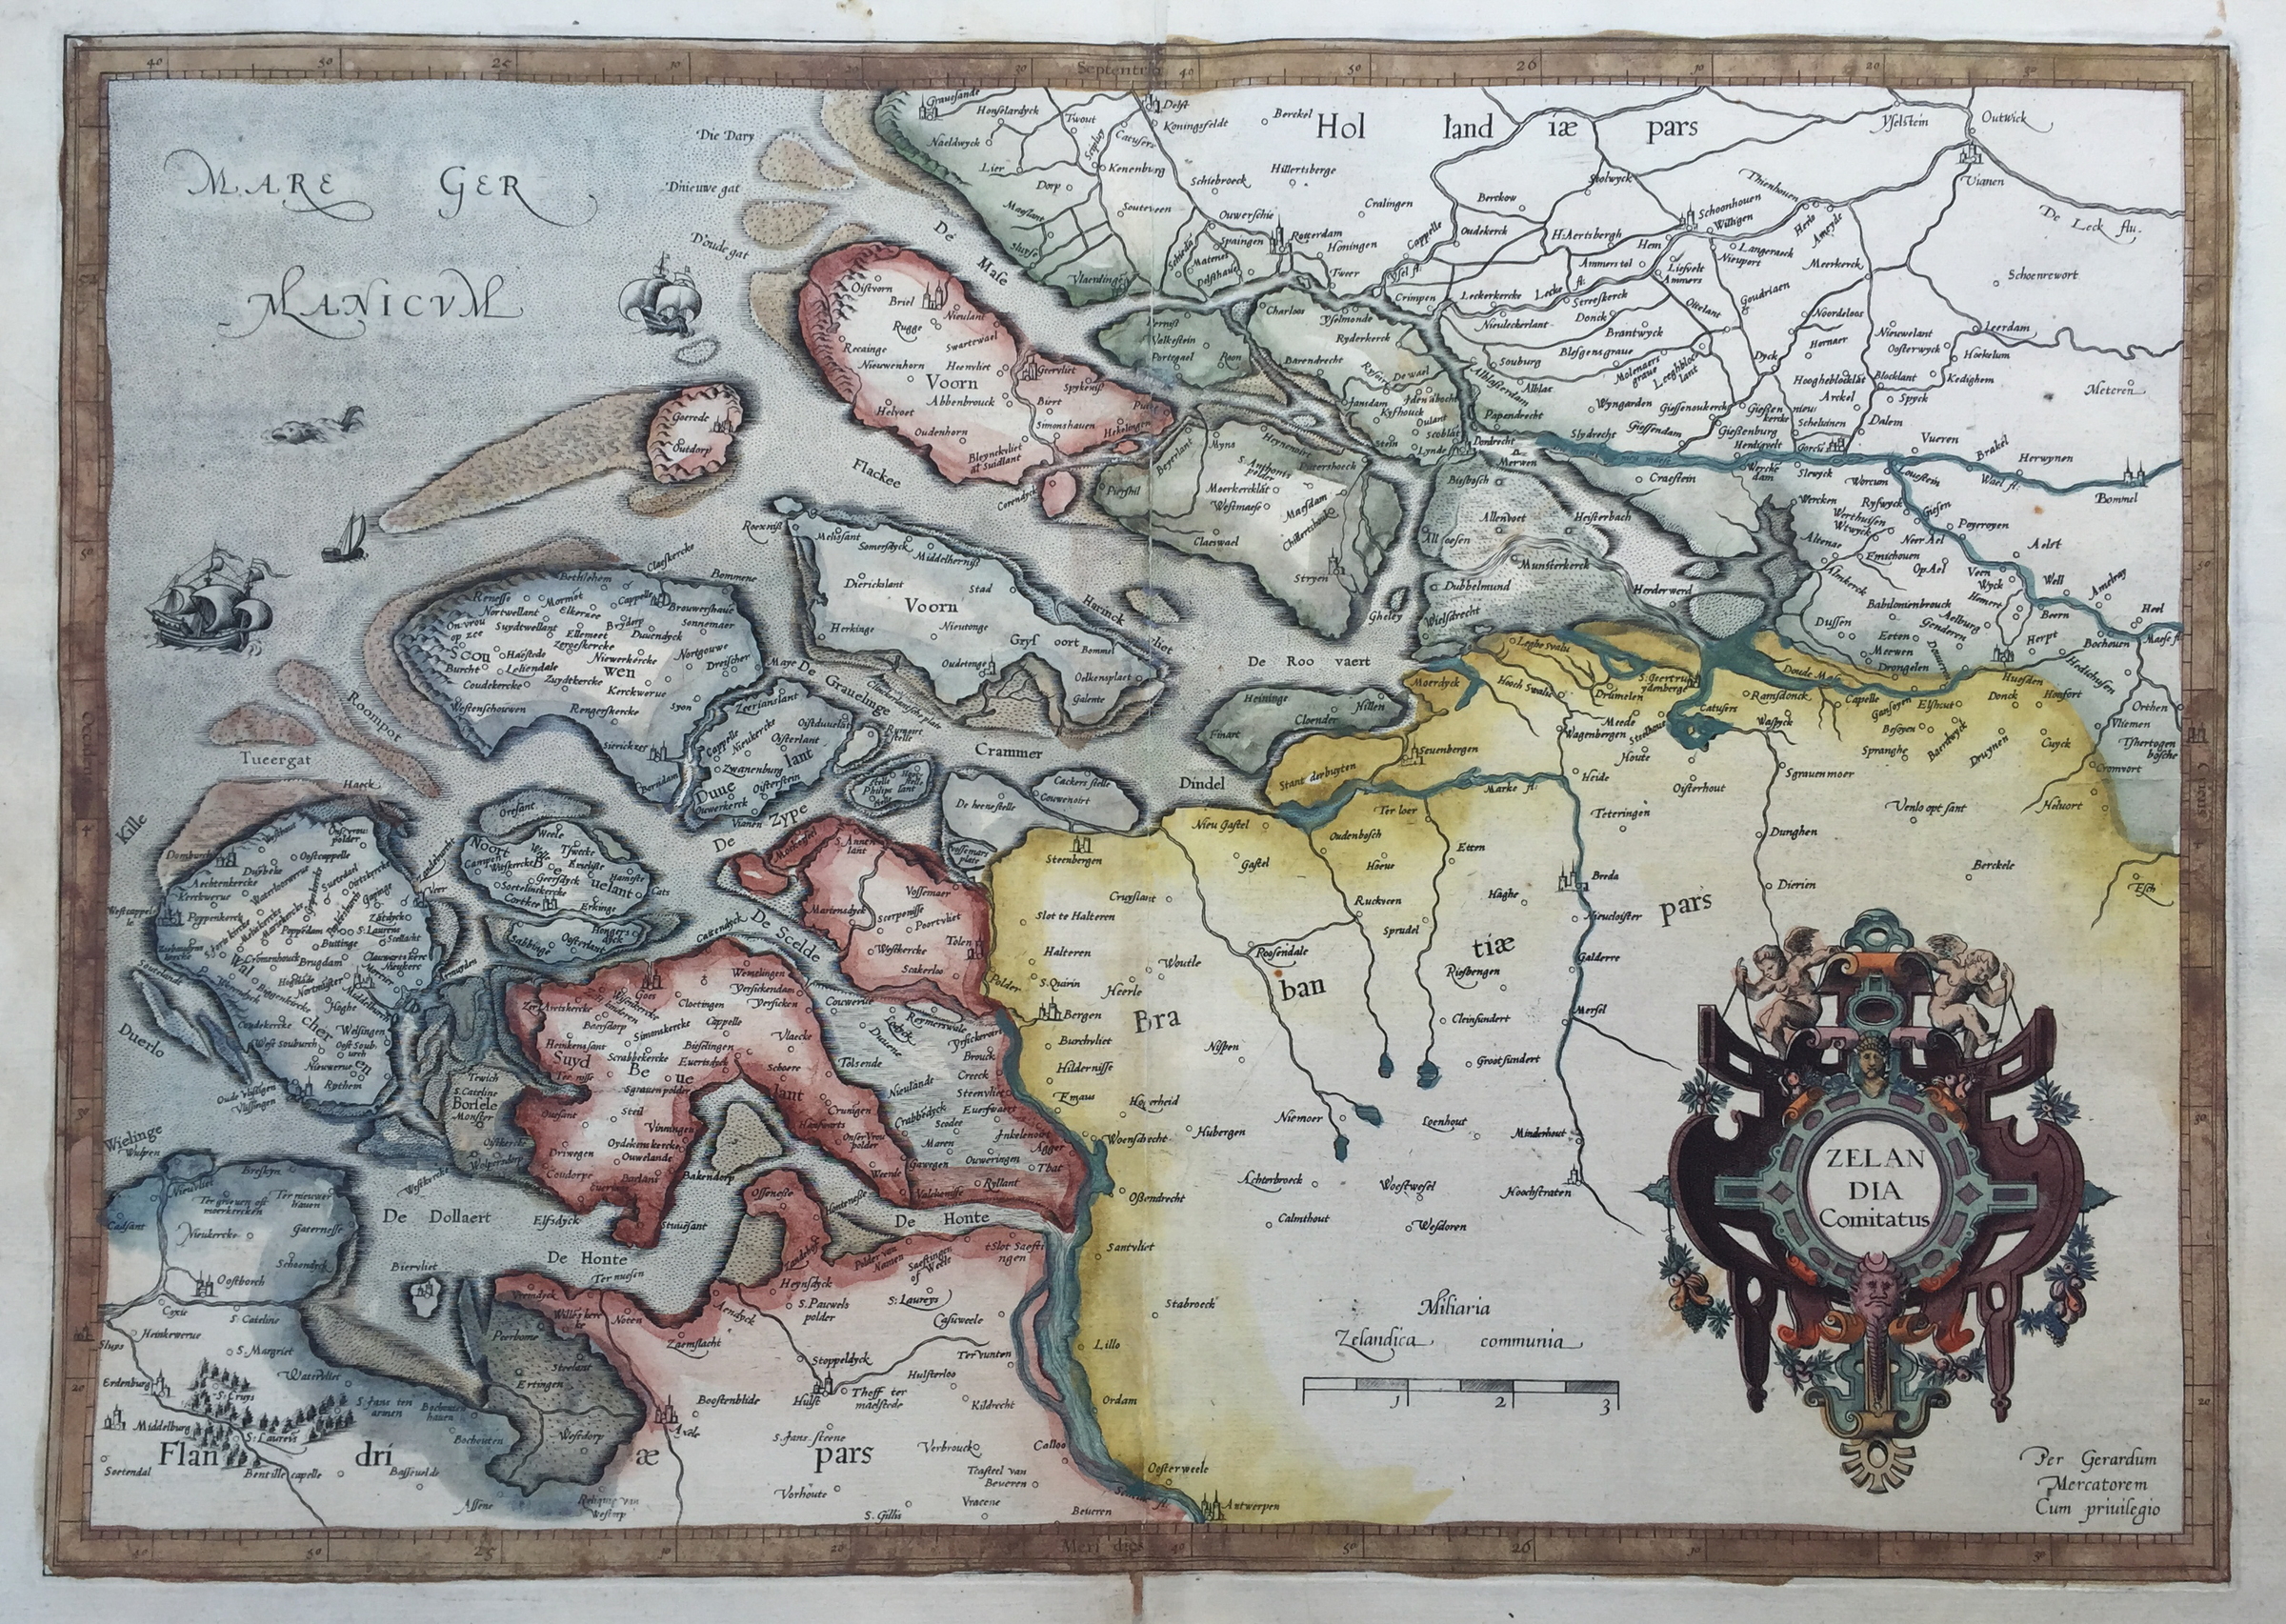 'Waar Brabant Zeeland kust' Kaart: Zelandia Comitatus, 1588